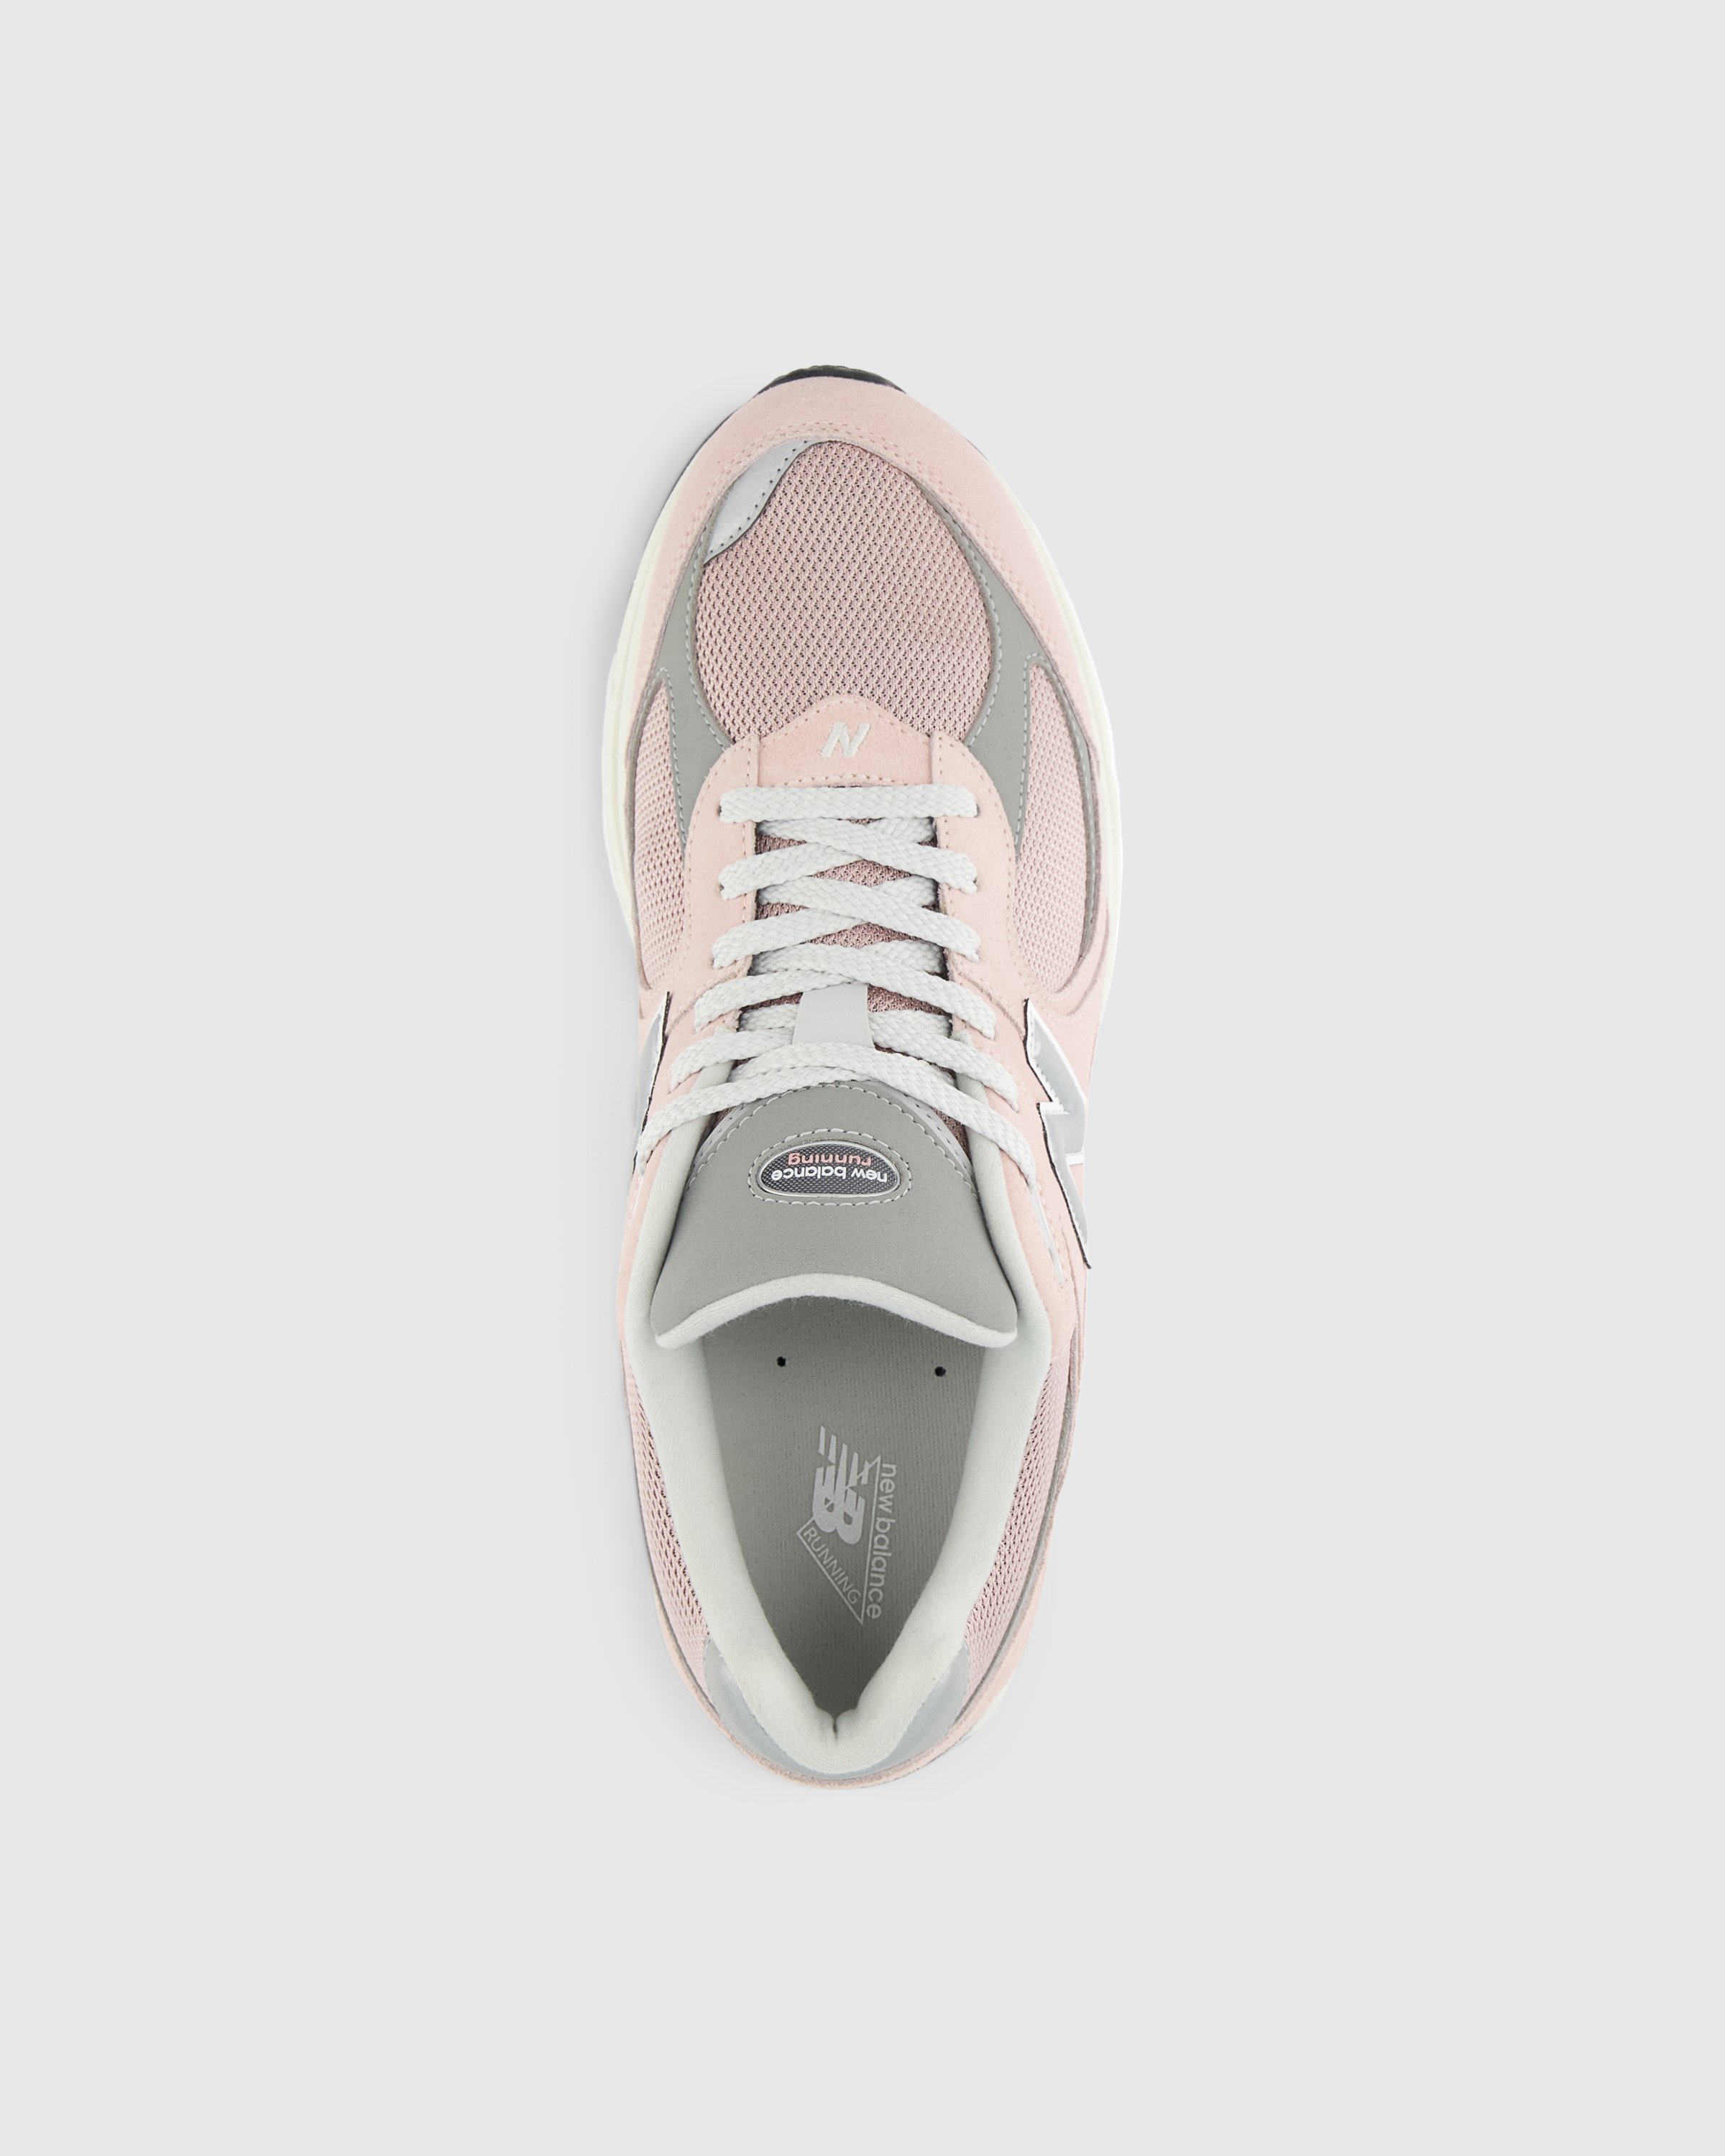 New Balance - M2002RFC ORB PINK - Footwear - Pink - Image 5